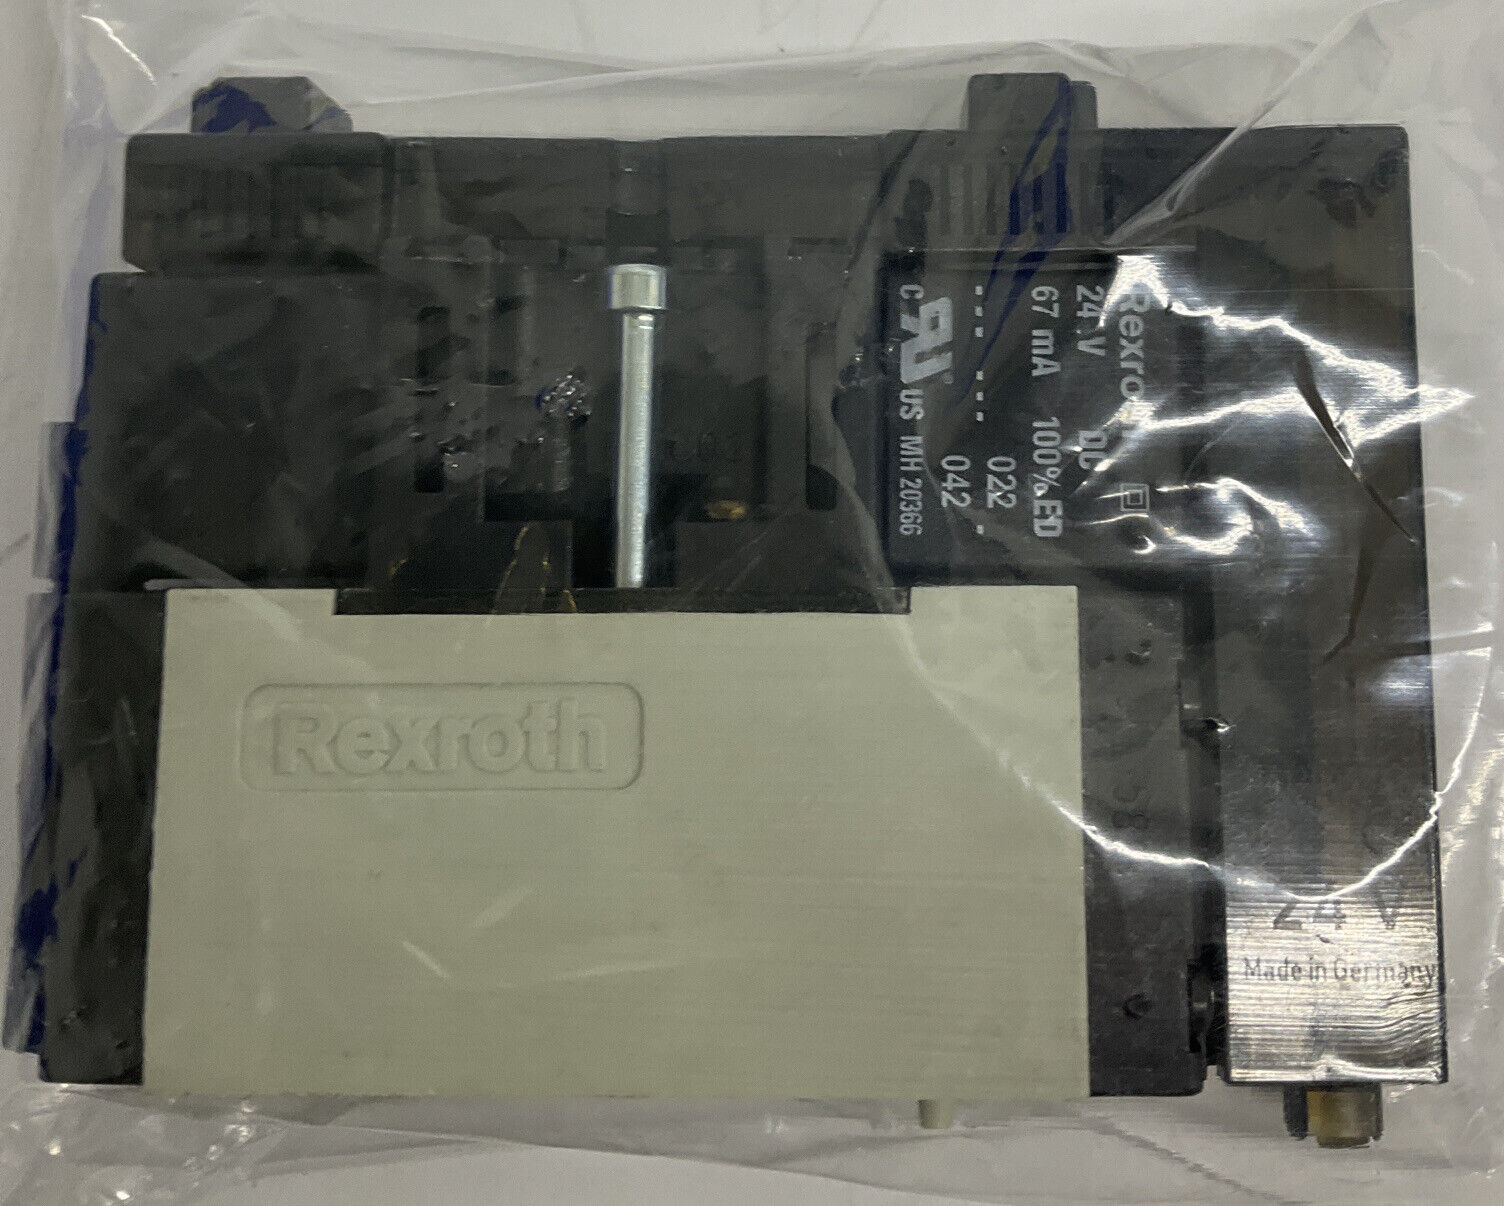 Rexroth CD26-PL 5763970120 New Pneumatic Solenoid Valve (BL155) - 0